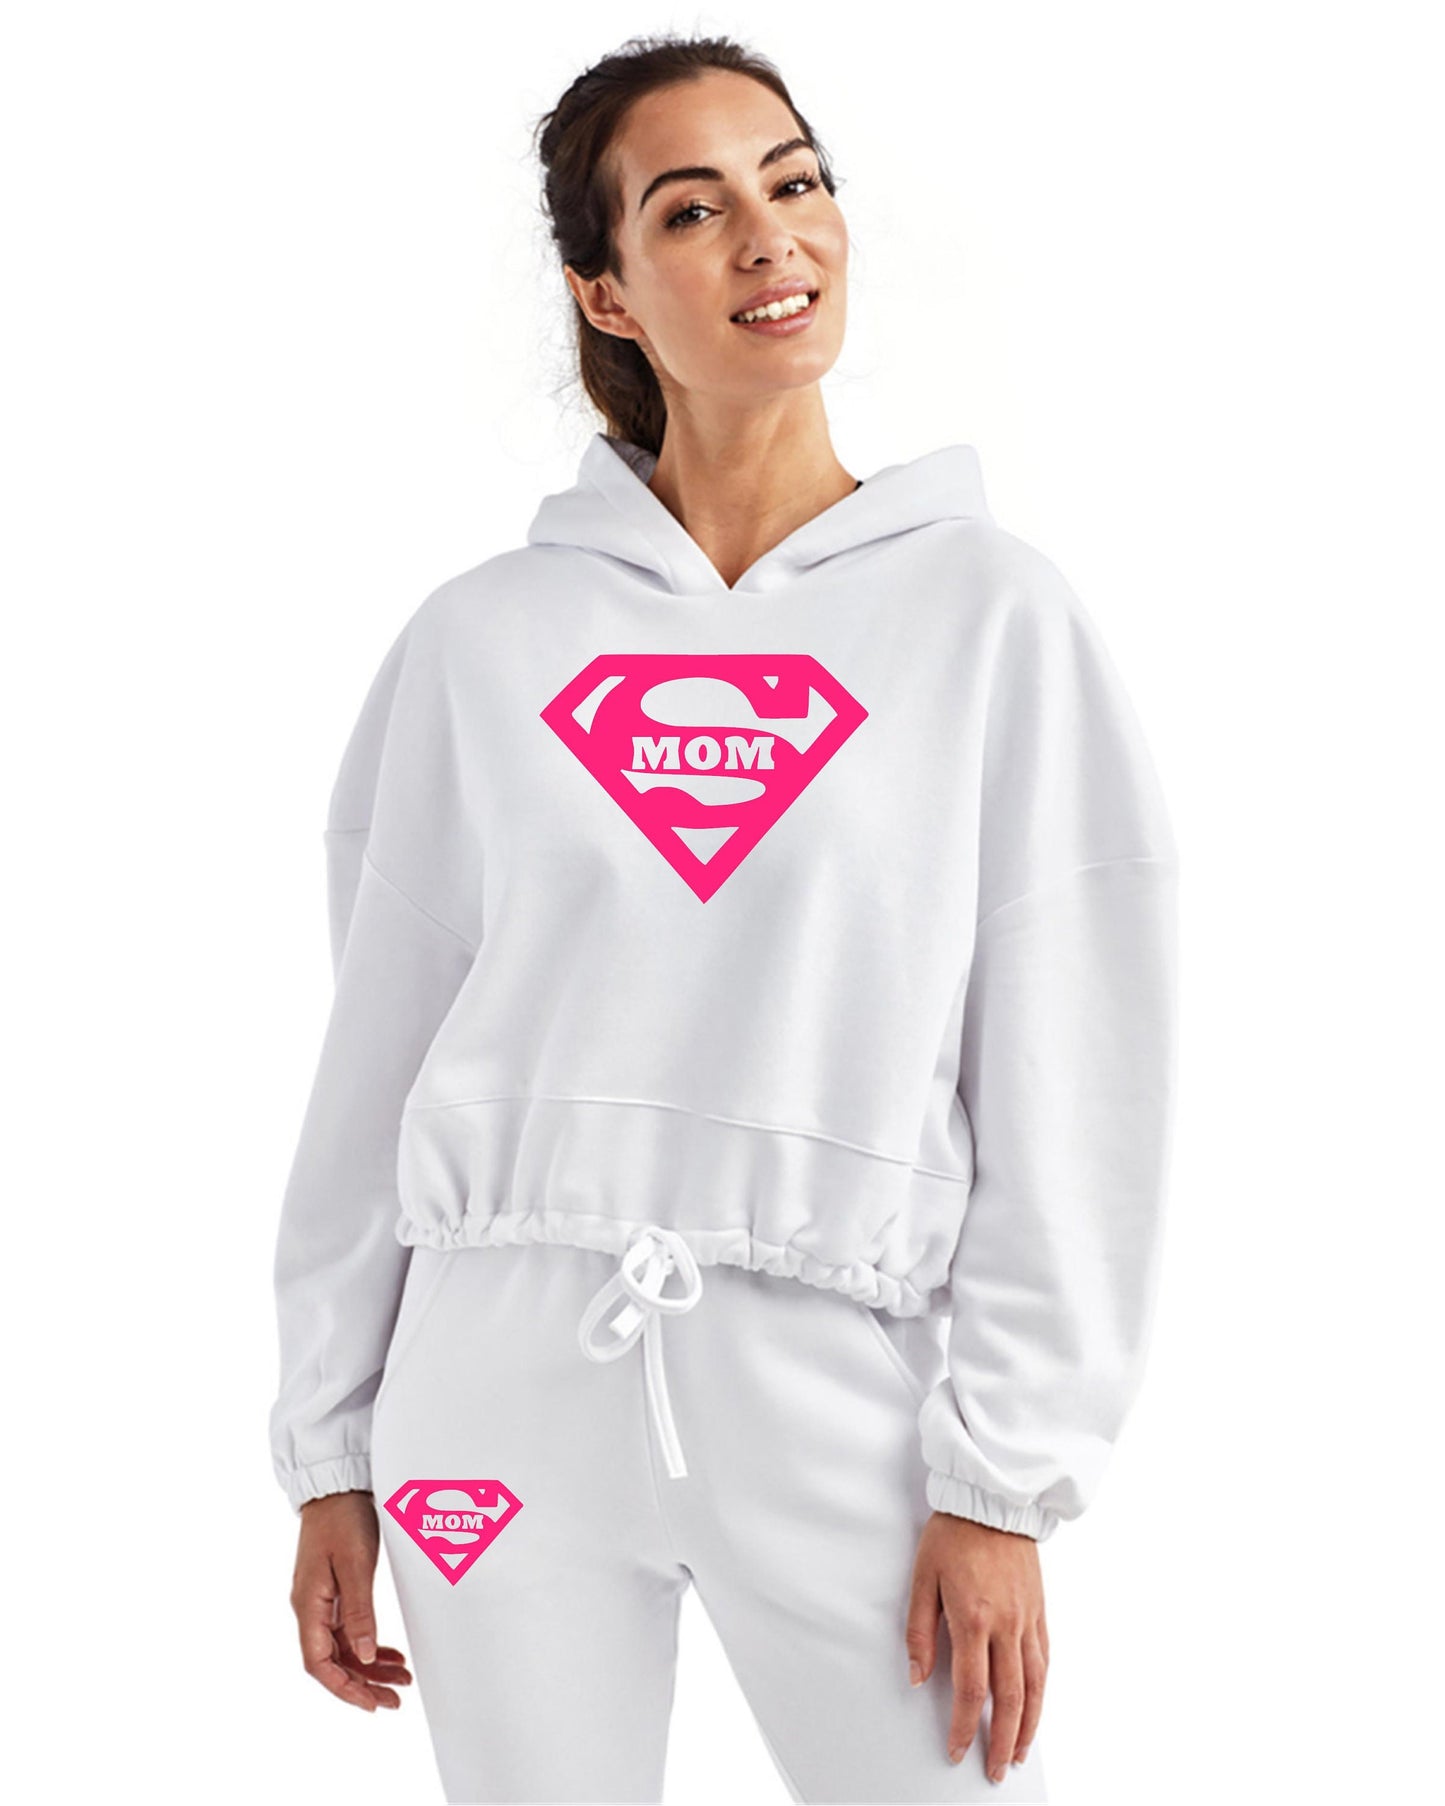 Super Mom Ladies Cropped Sweatsuit